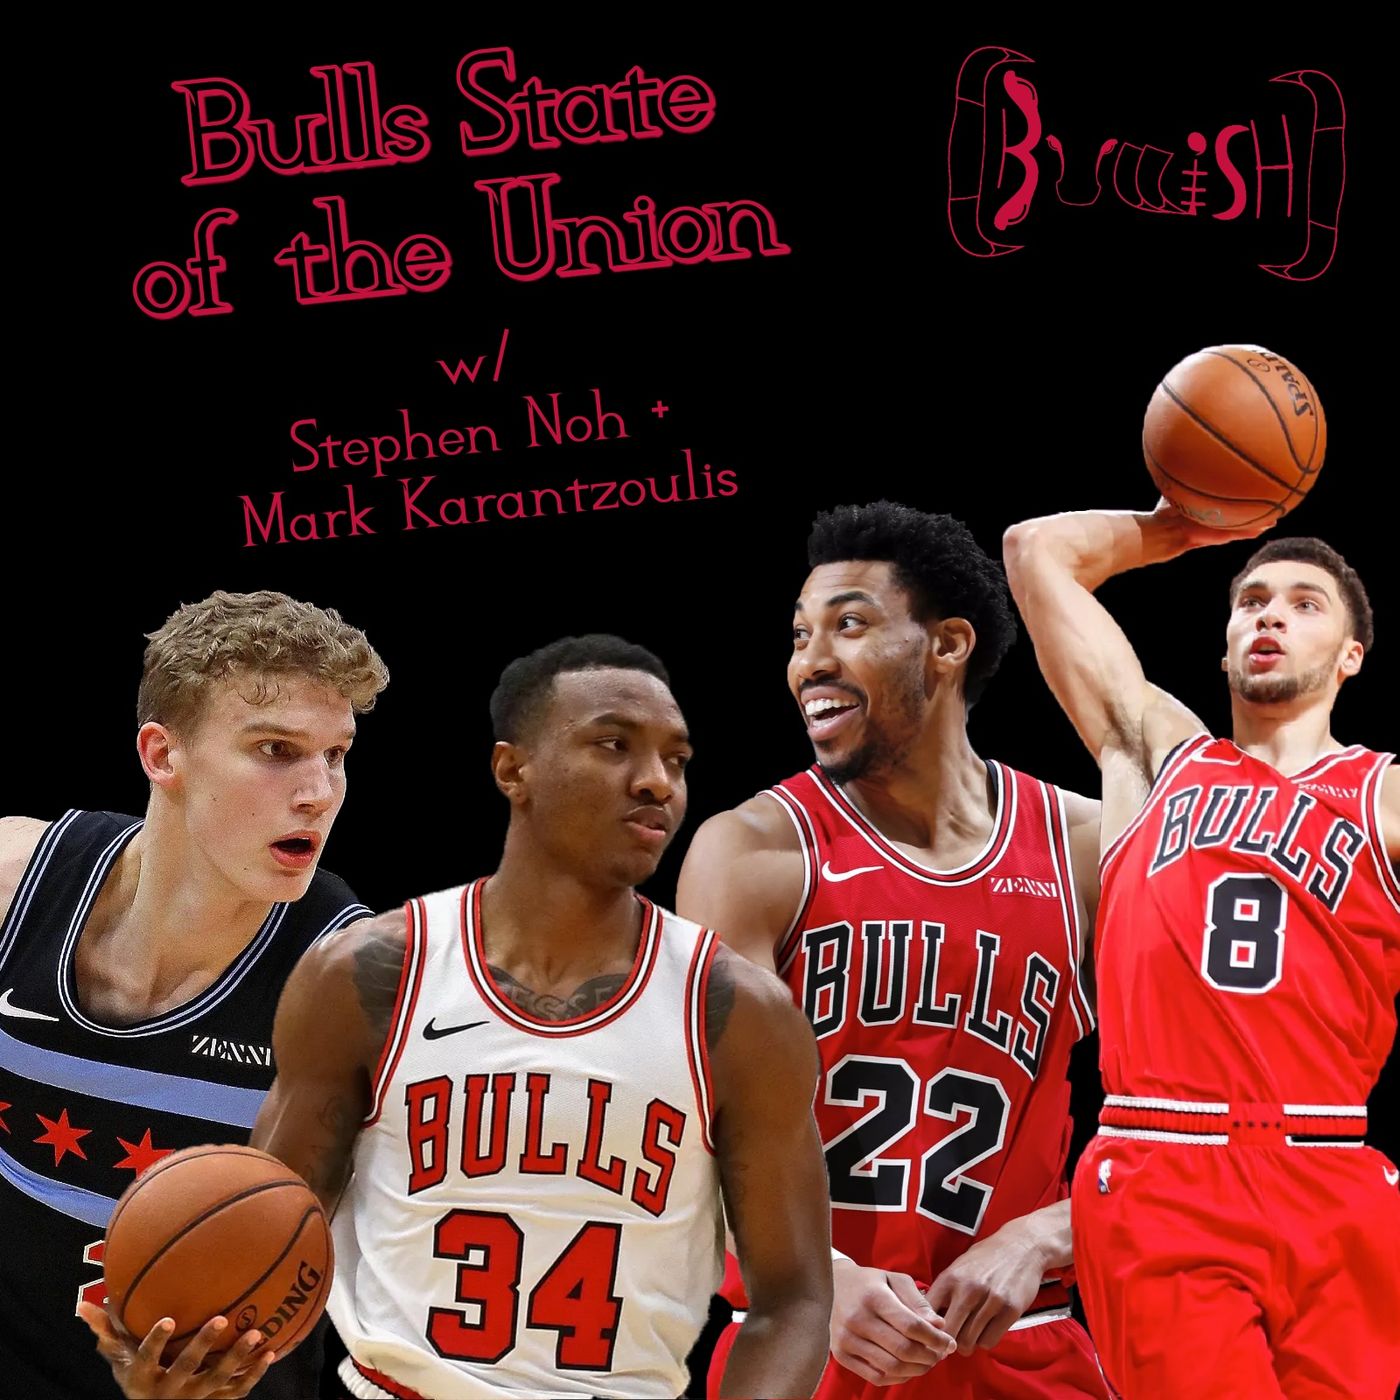 Bulls State of the Union with Stephen Noh and Mark Karantzoulis | Bullish Simulcast